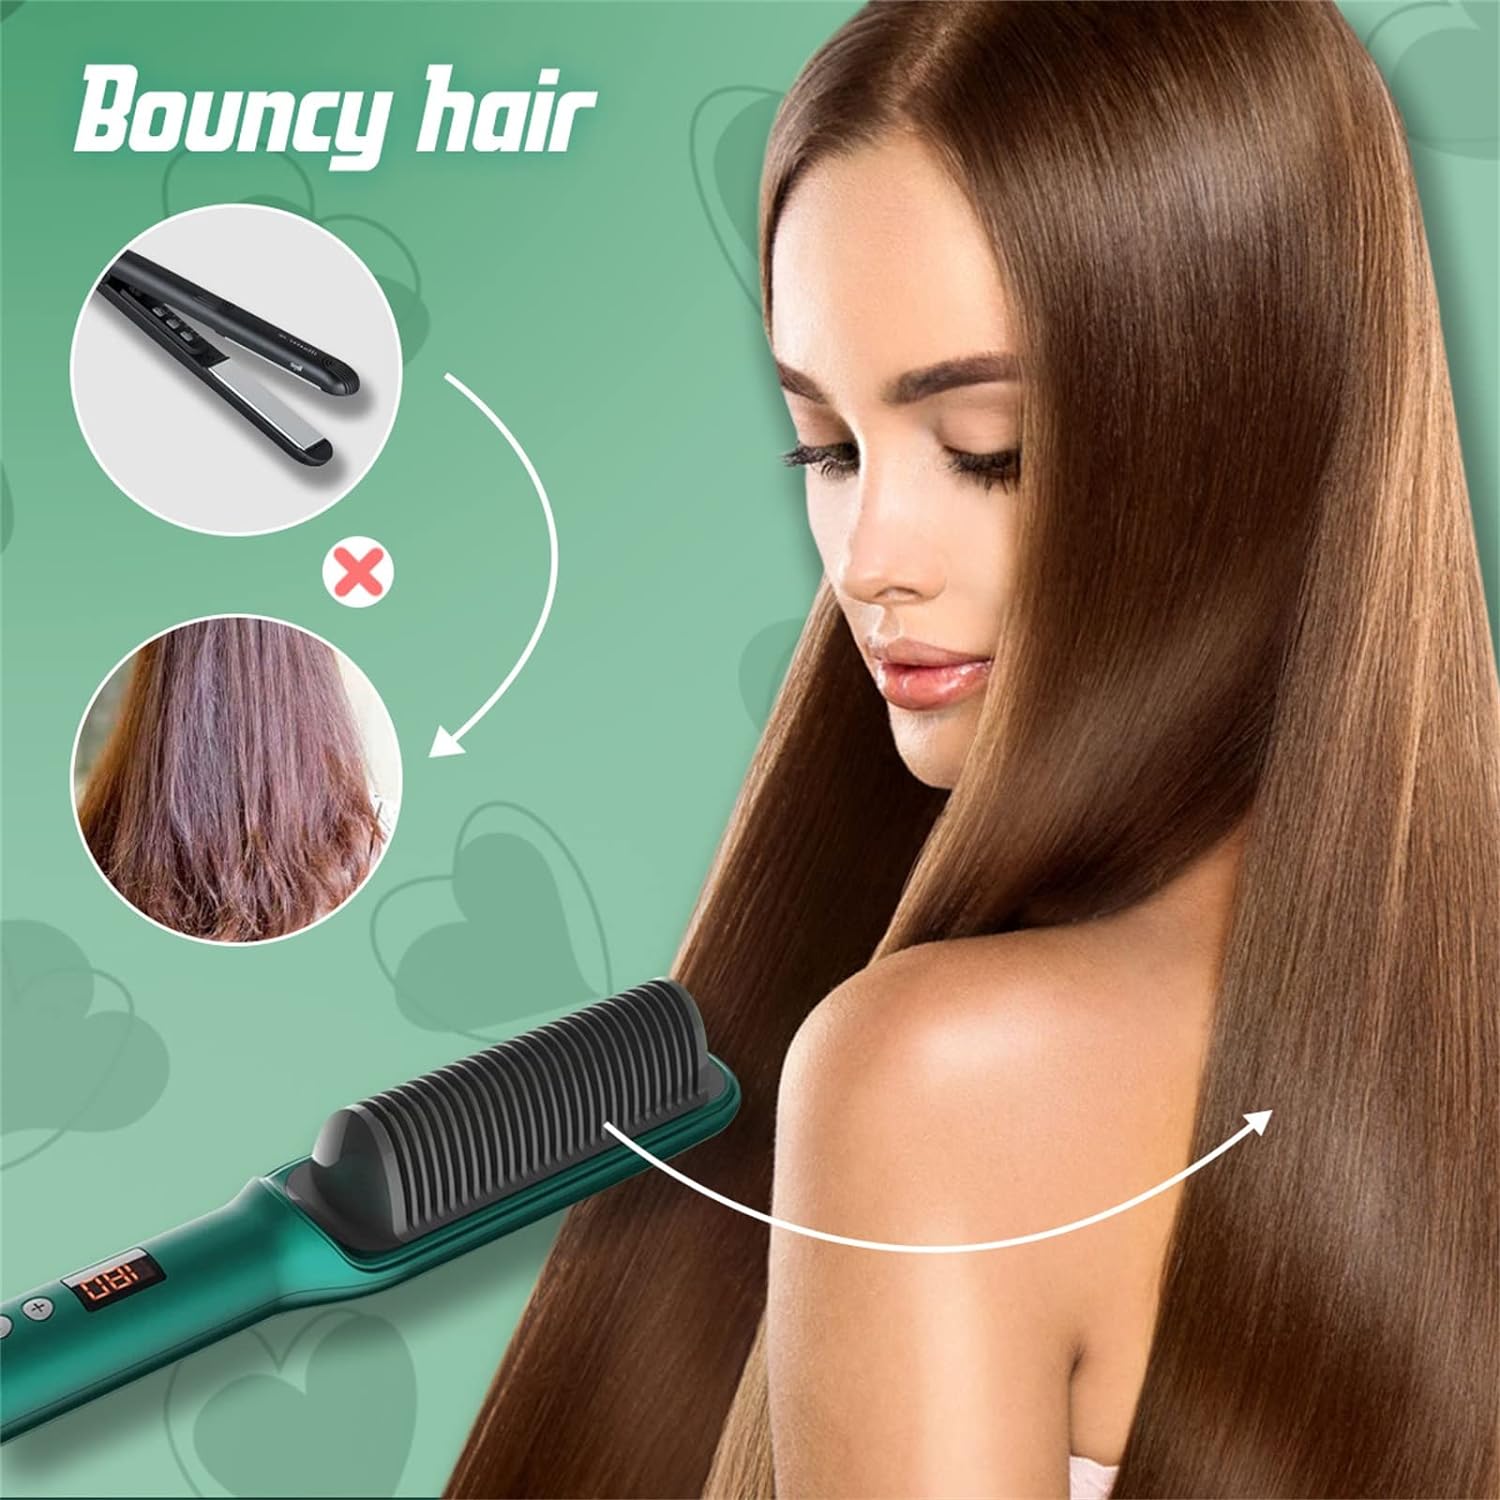 Hair Straightener Comb & Curler